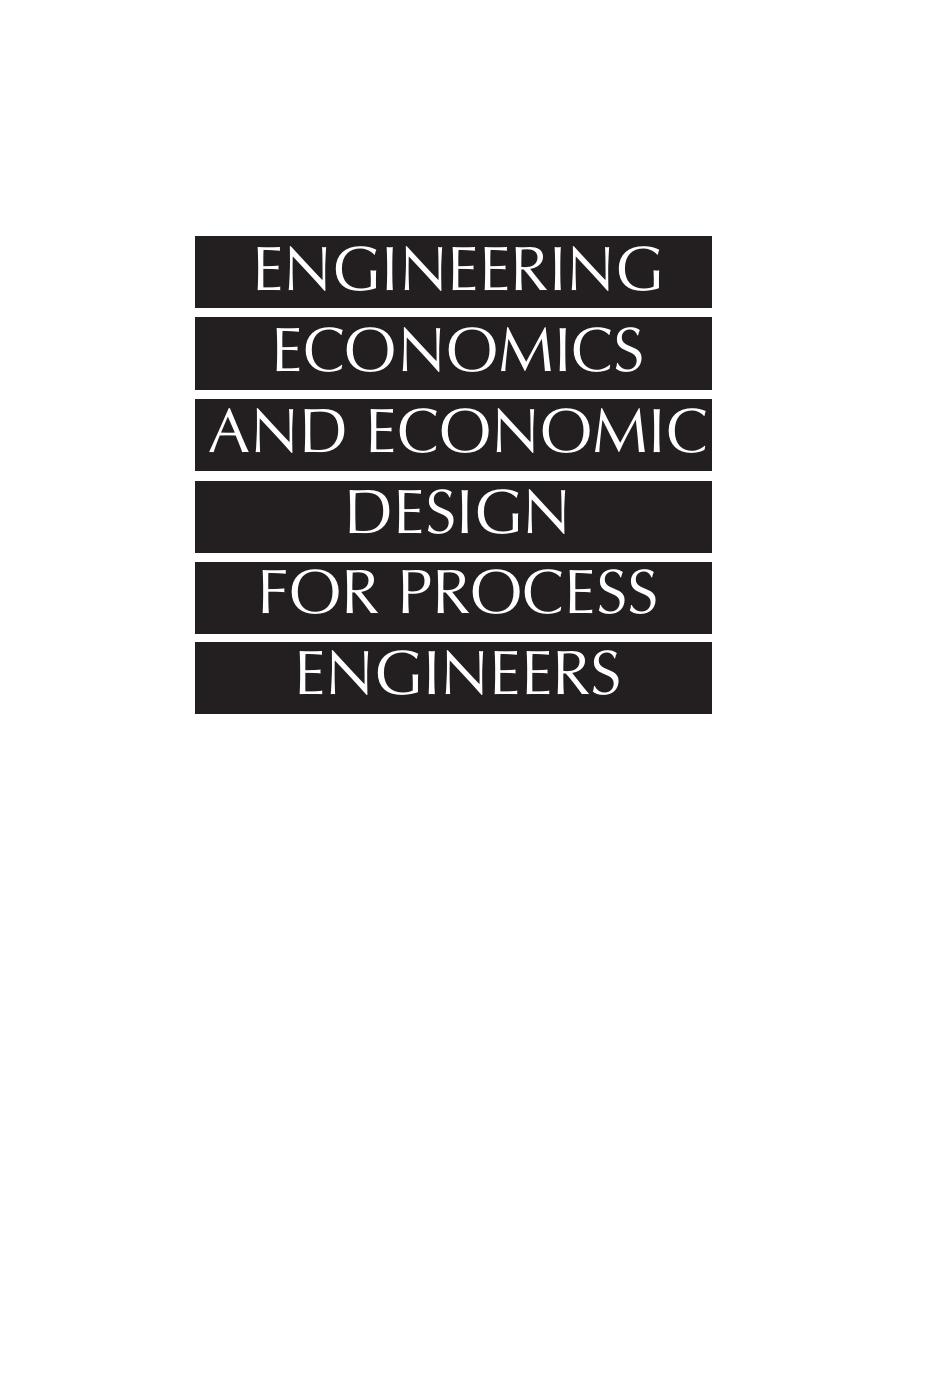 Engineering Economics and Economic Design for Process Engineers 2006.pdf